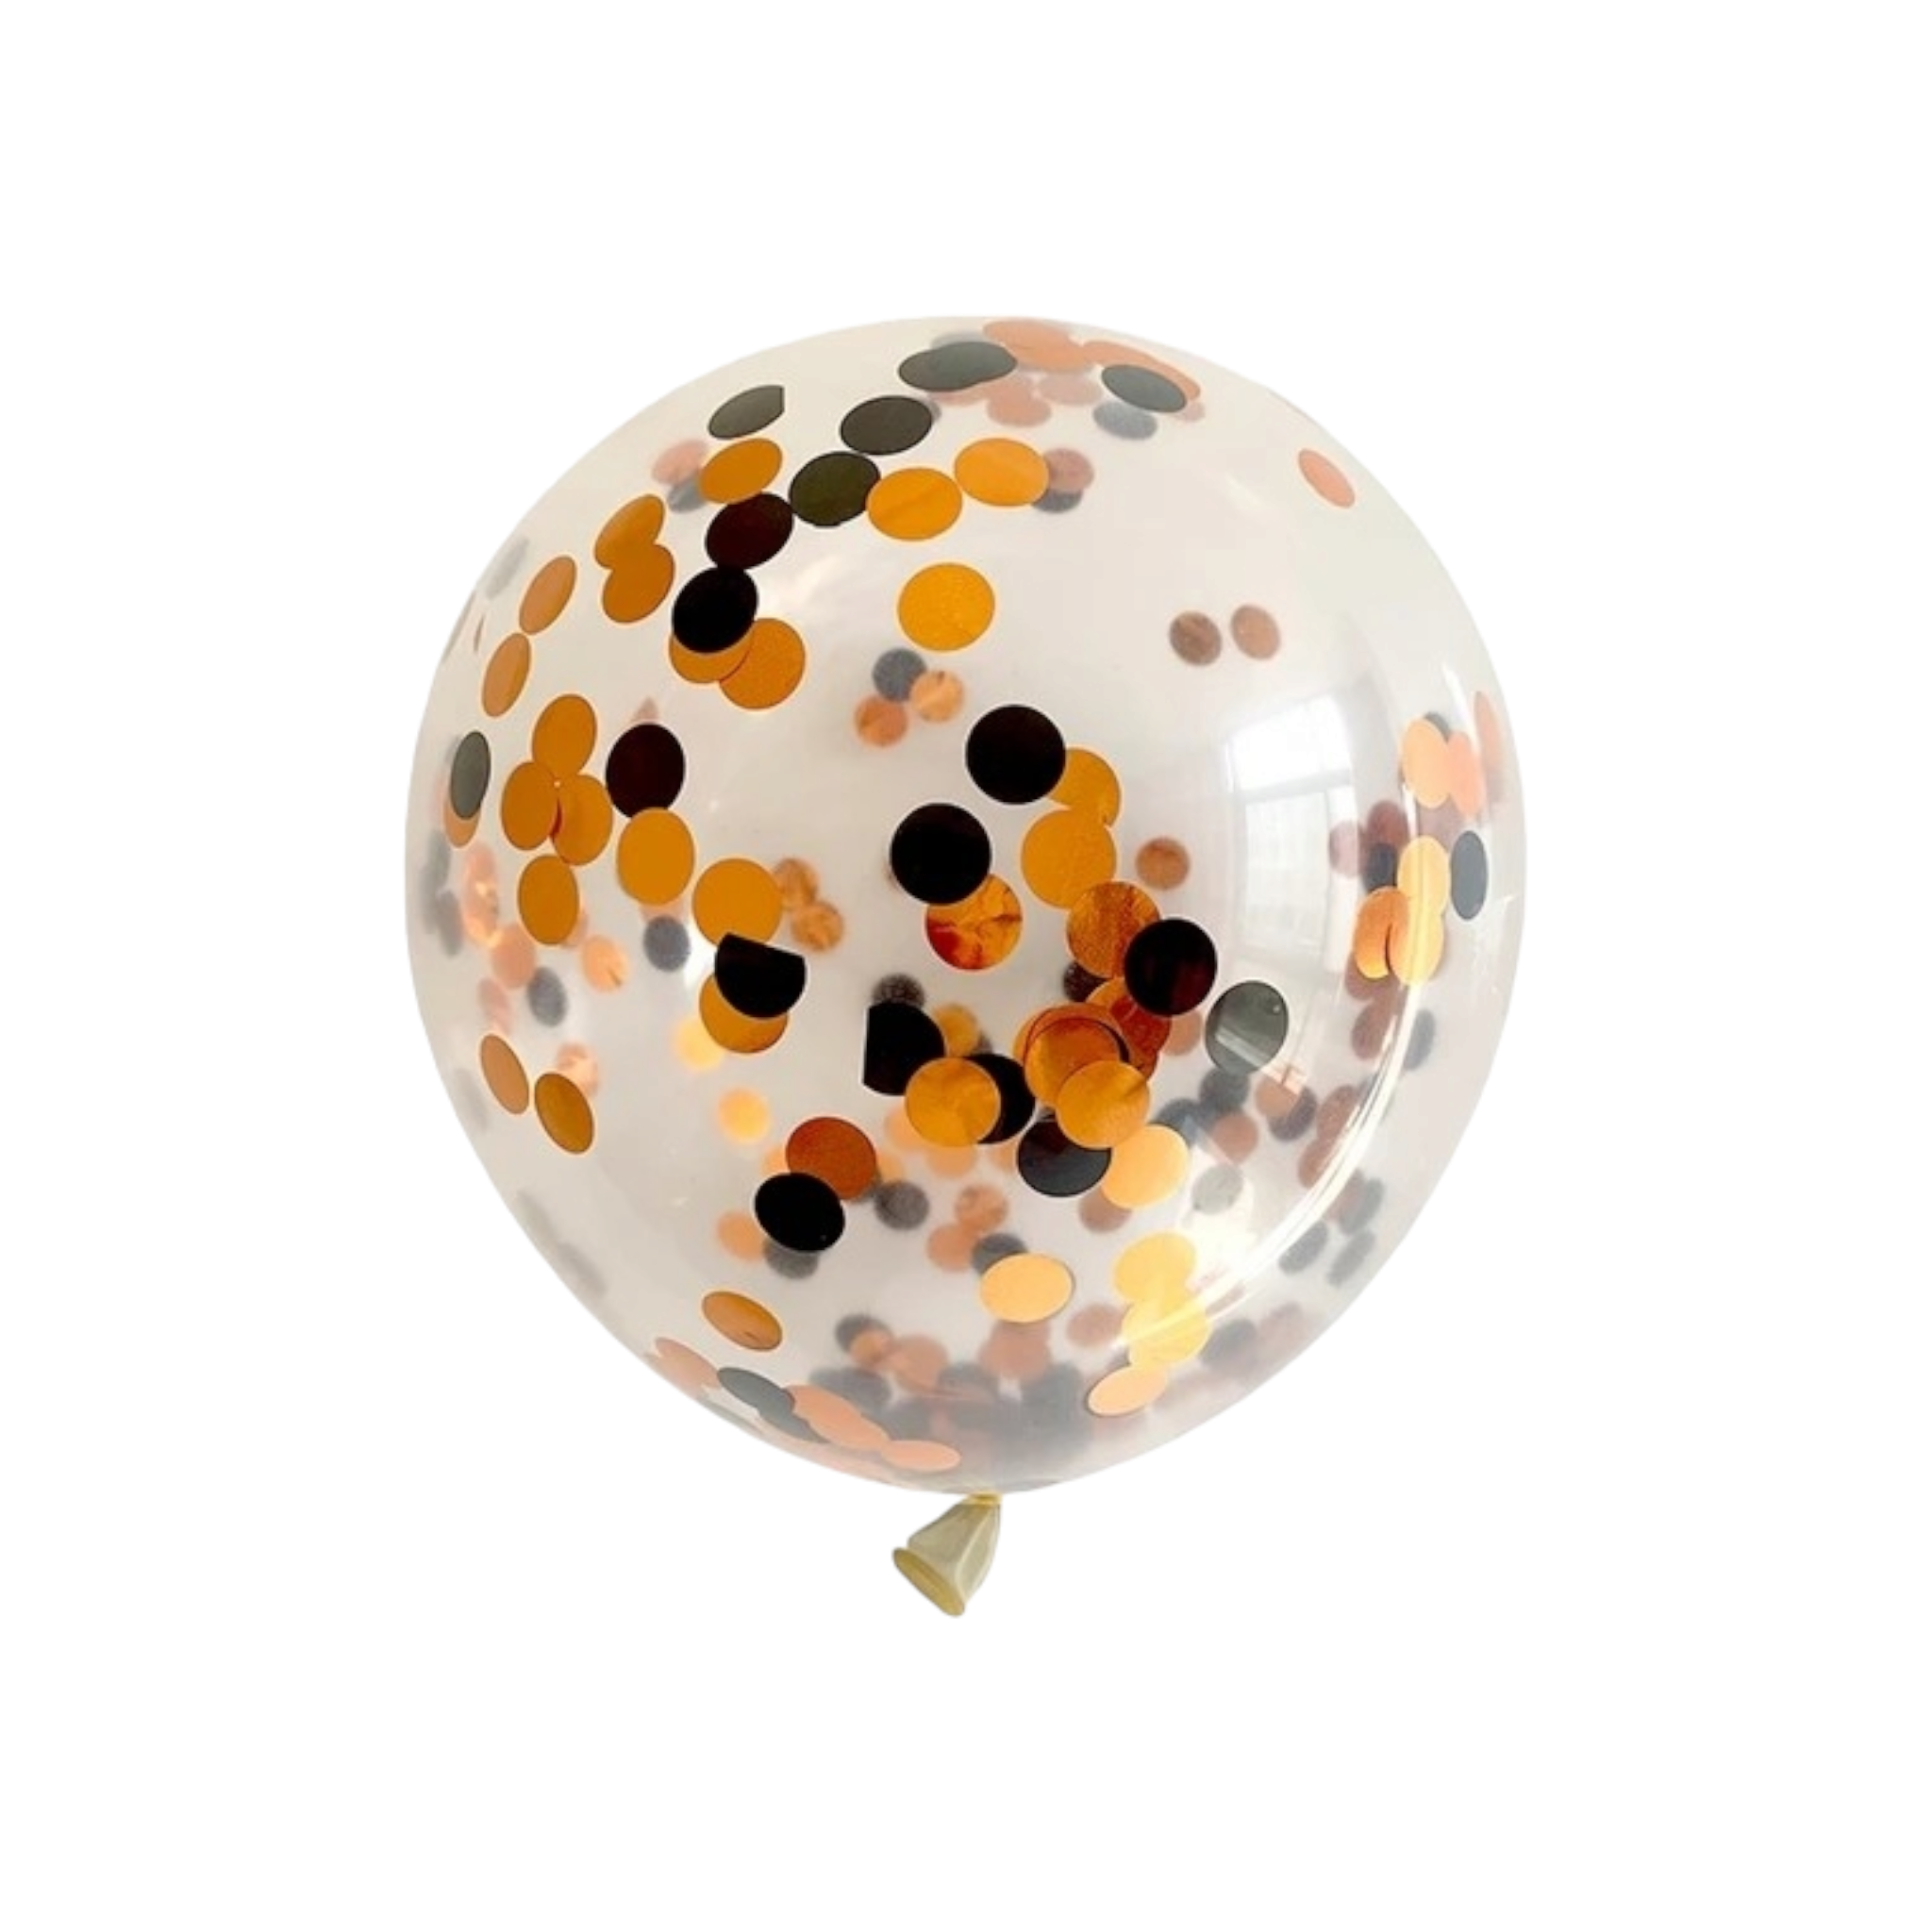 Bobo Balloon with Confetti 24inch Helium Grade LJ-1804